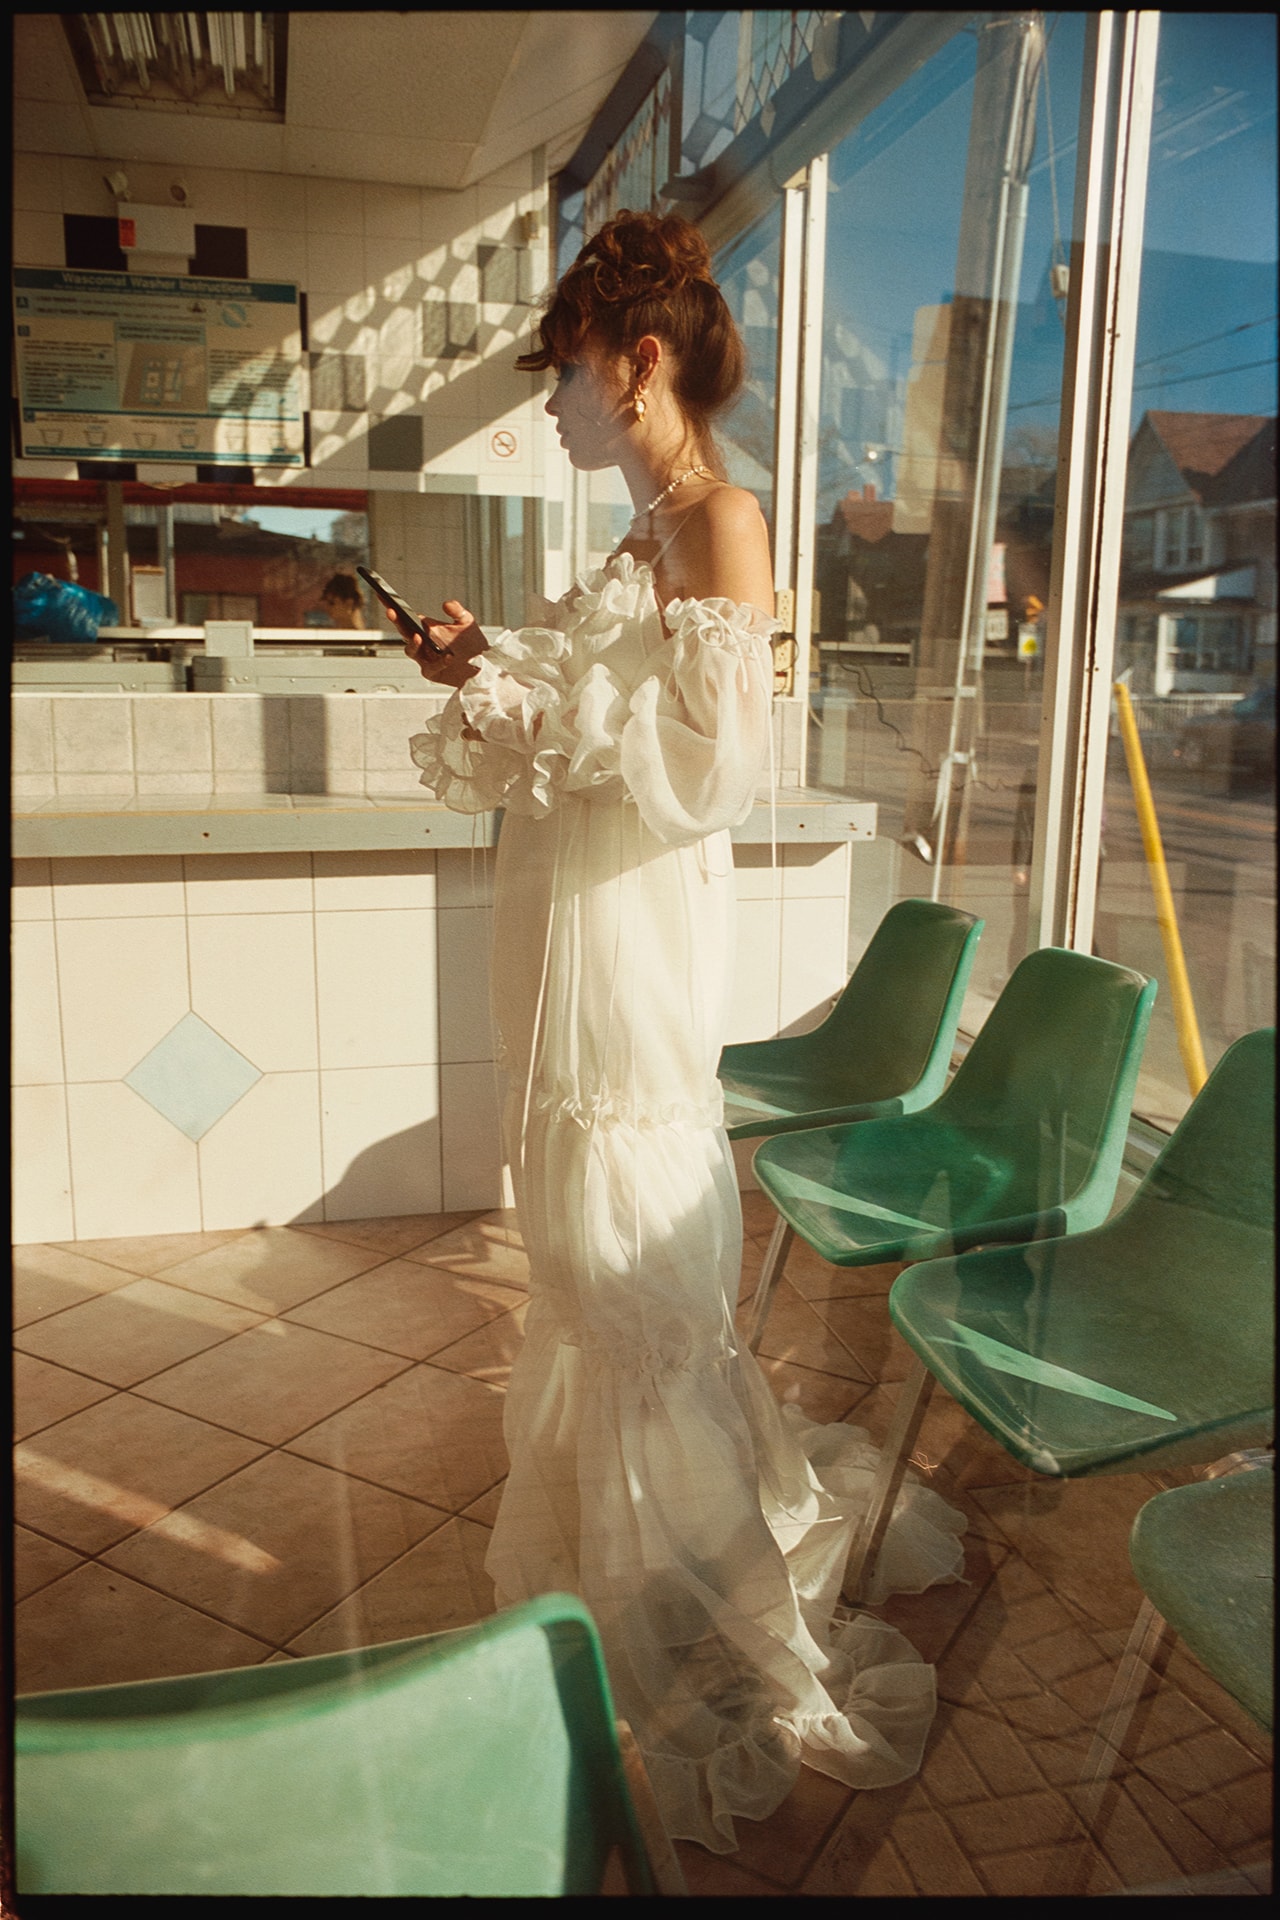 SOTO Bridal Wear Bridalwear Marque Robe de mariée Robes Fashion-Forward Brides Modern Gowns Latinx Inspired Founders Enrique Boni Unbridled Collection